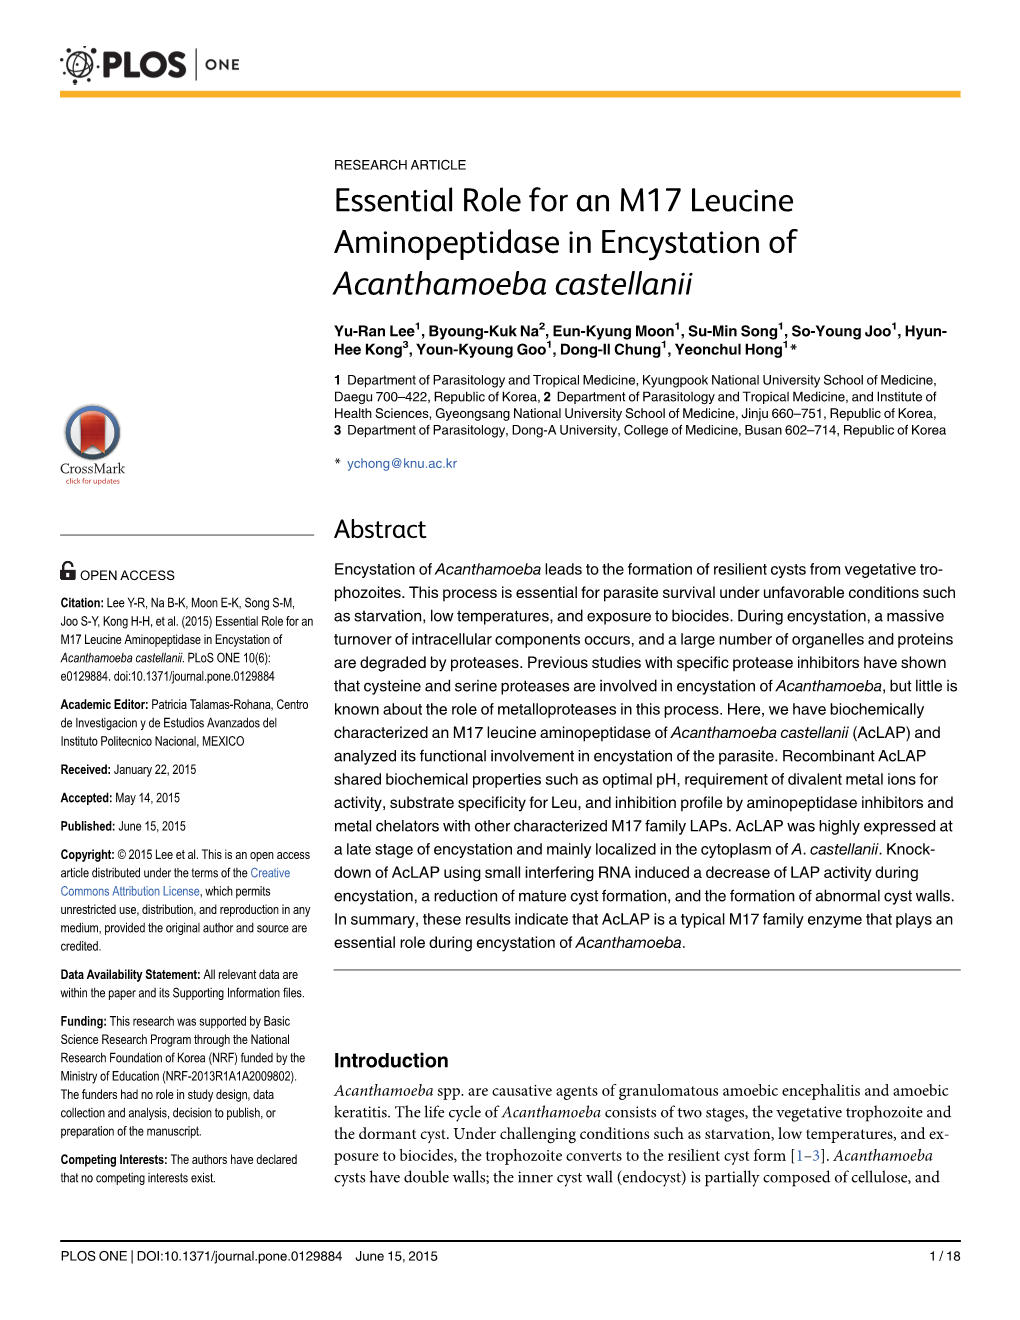 Essential Role for an M17 Leucine Aminopeptidase in Encystation of Acanthamoeba Castellanii